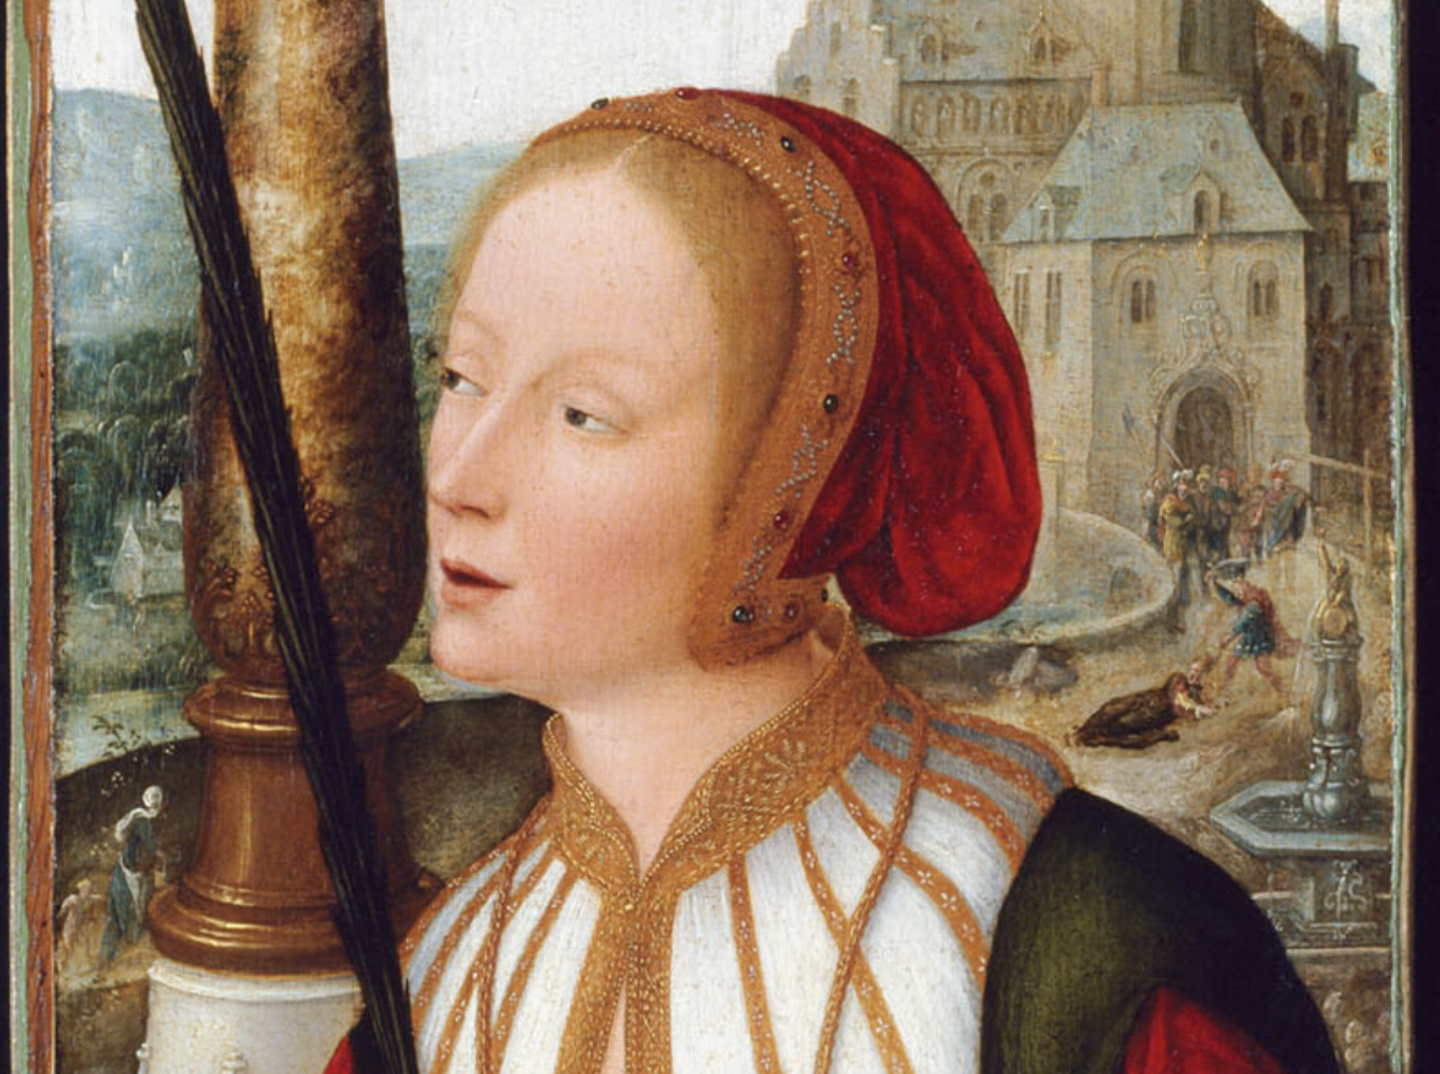 Saint Barbara (1520) by Jean Bellegambe - Public Domain Catholic Painting